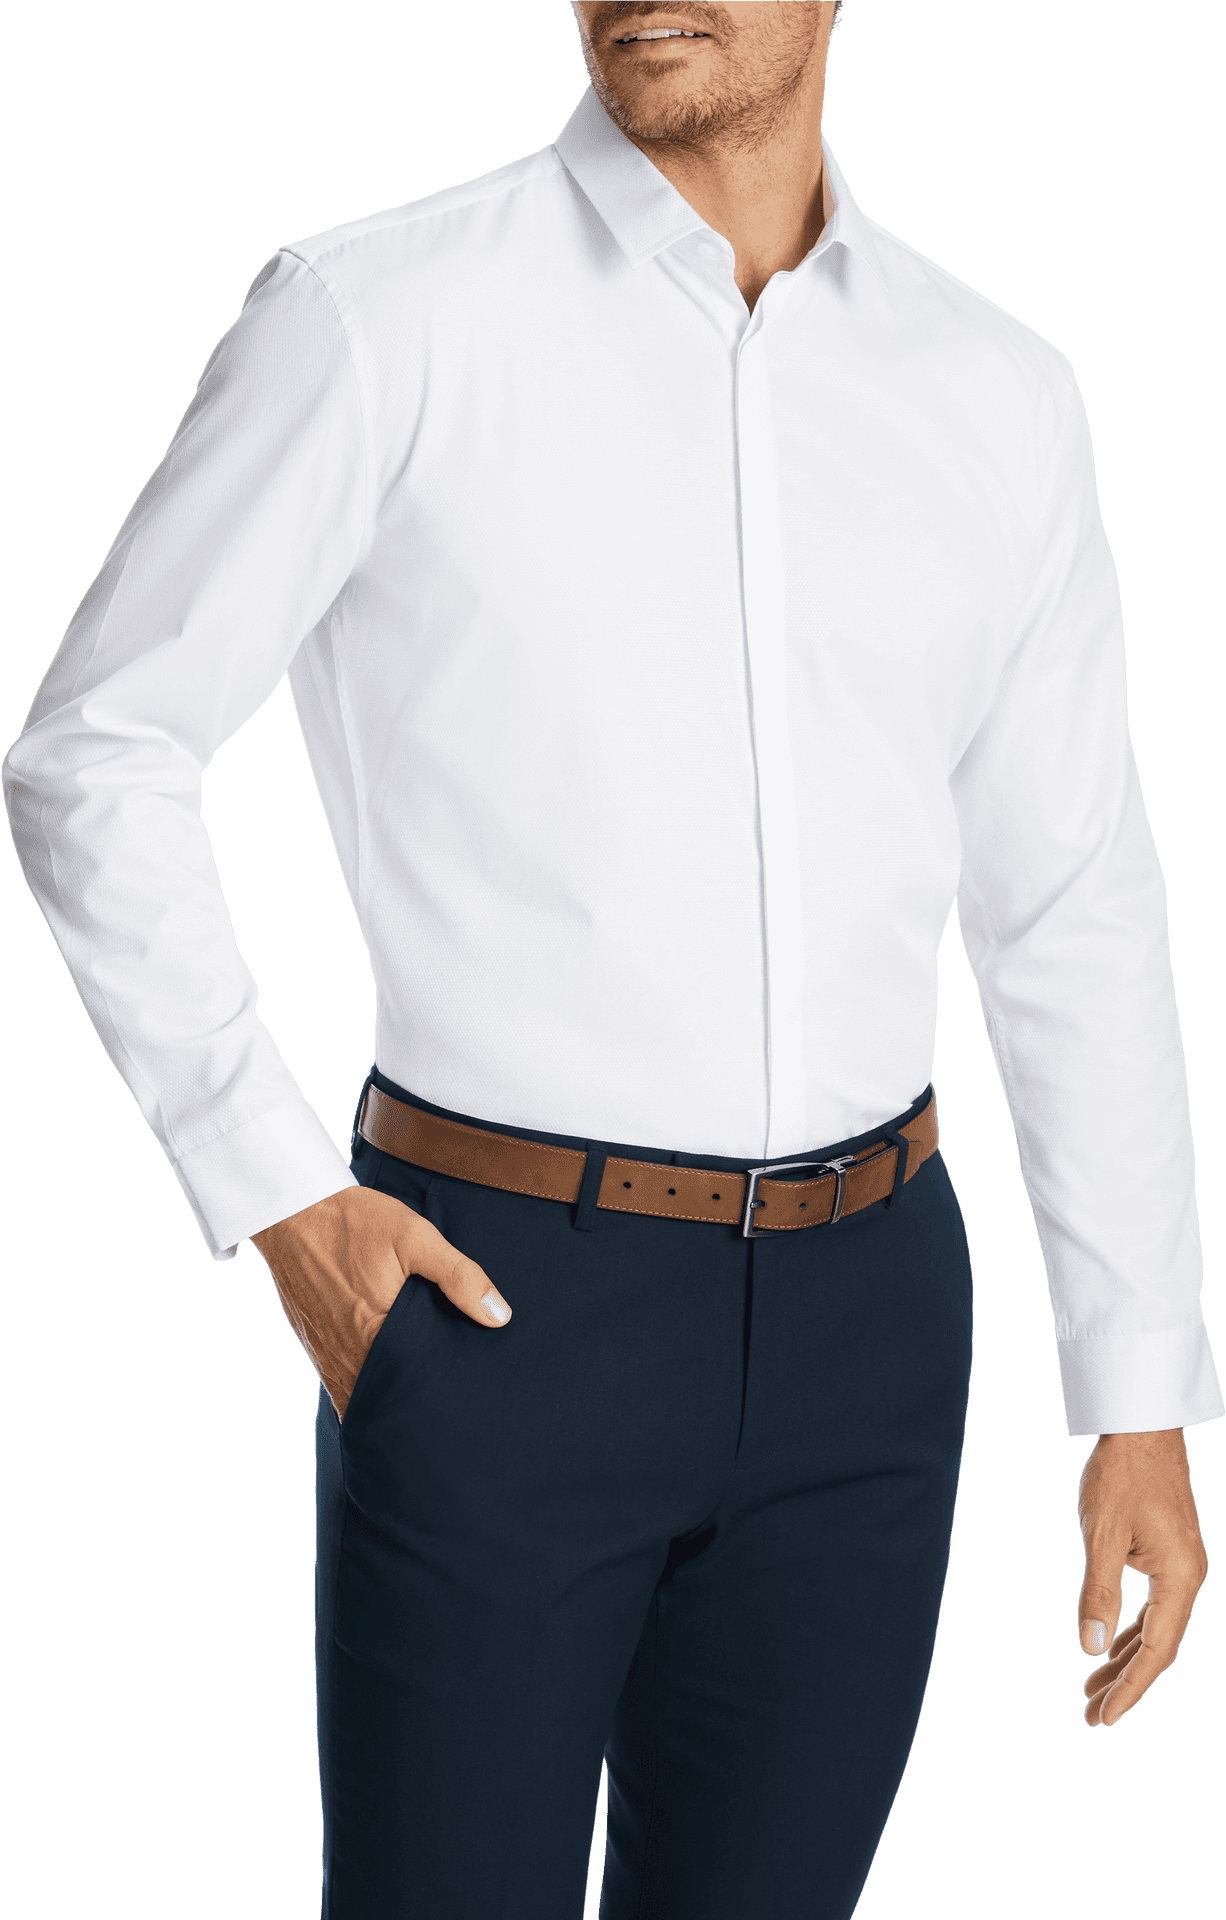 Manin Formal Attire White Shirt Navy Pants PNG